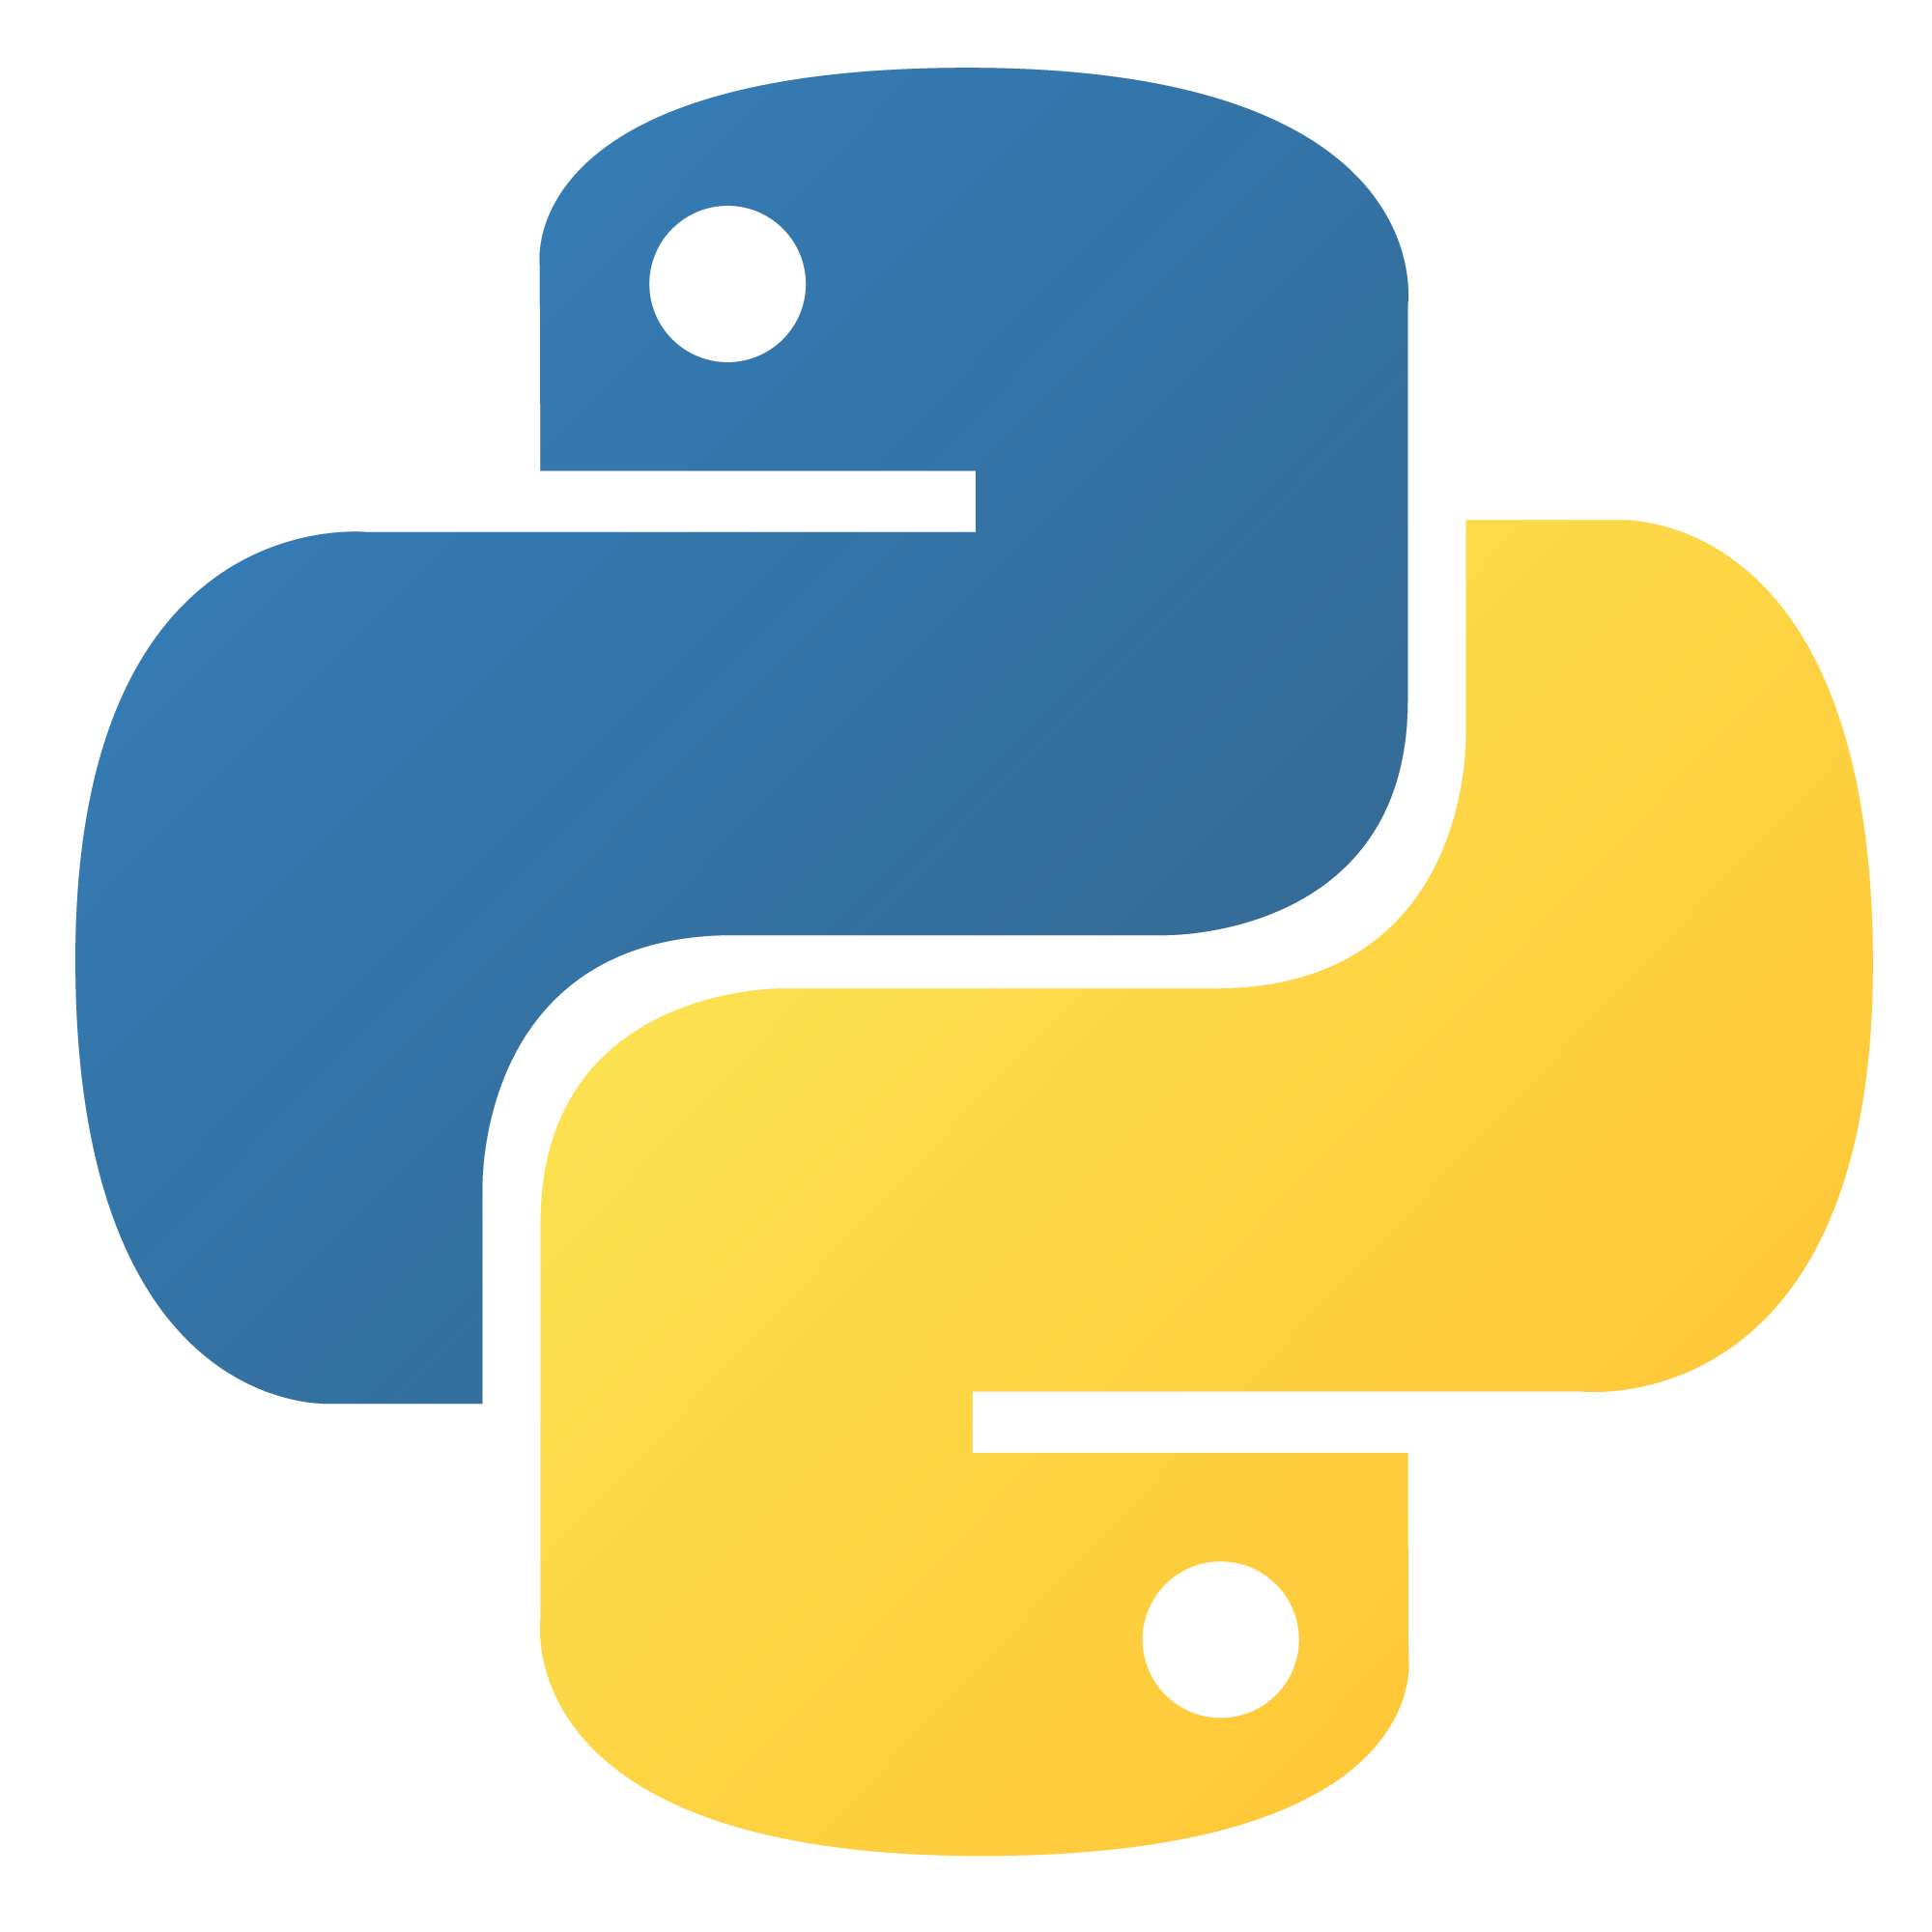 Python example code